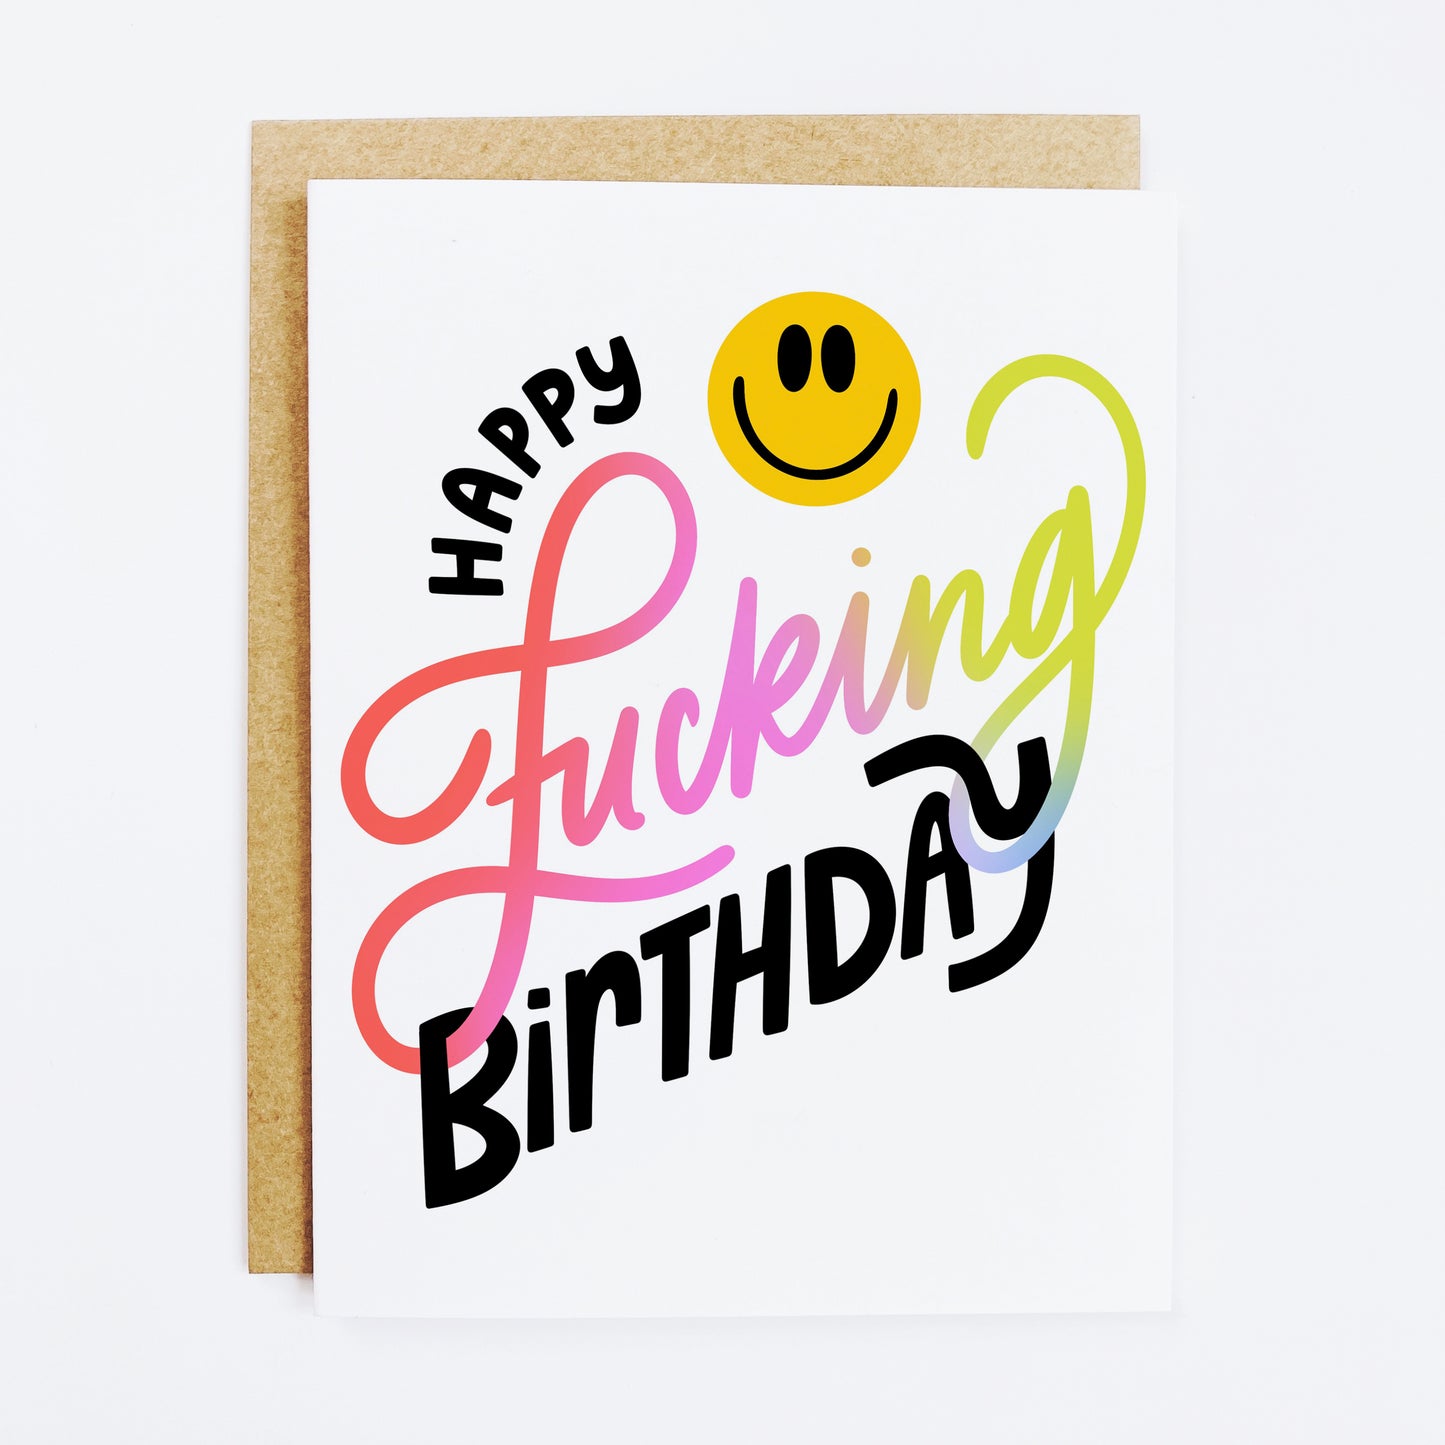 Happy F*cking Birthday Card